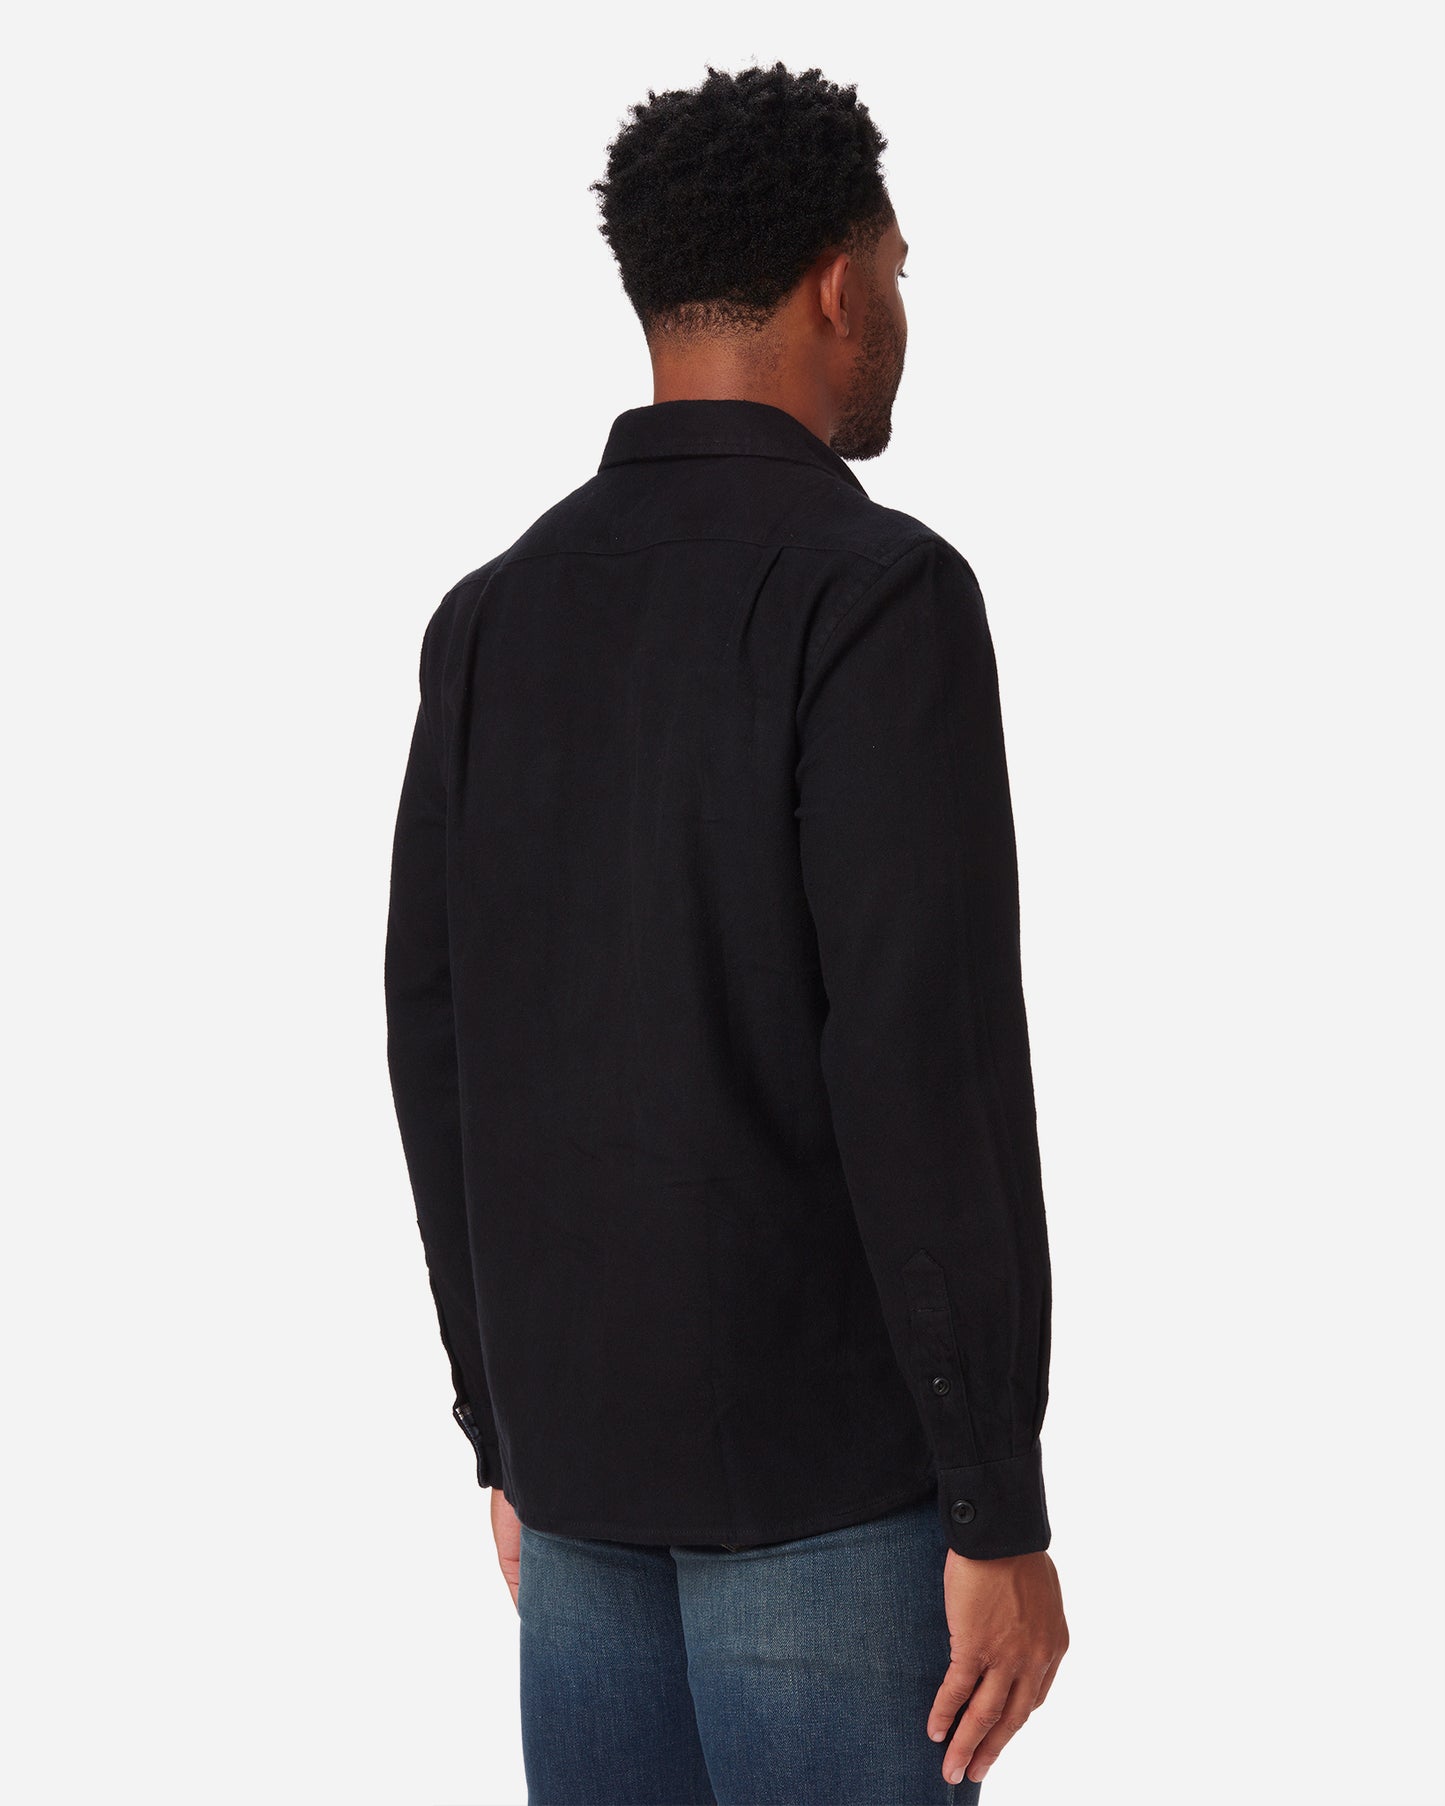 Flannel Shirt - Black Black